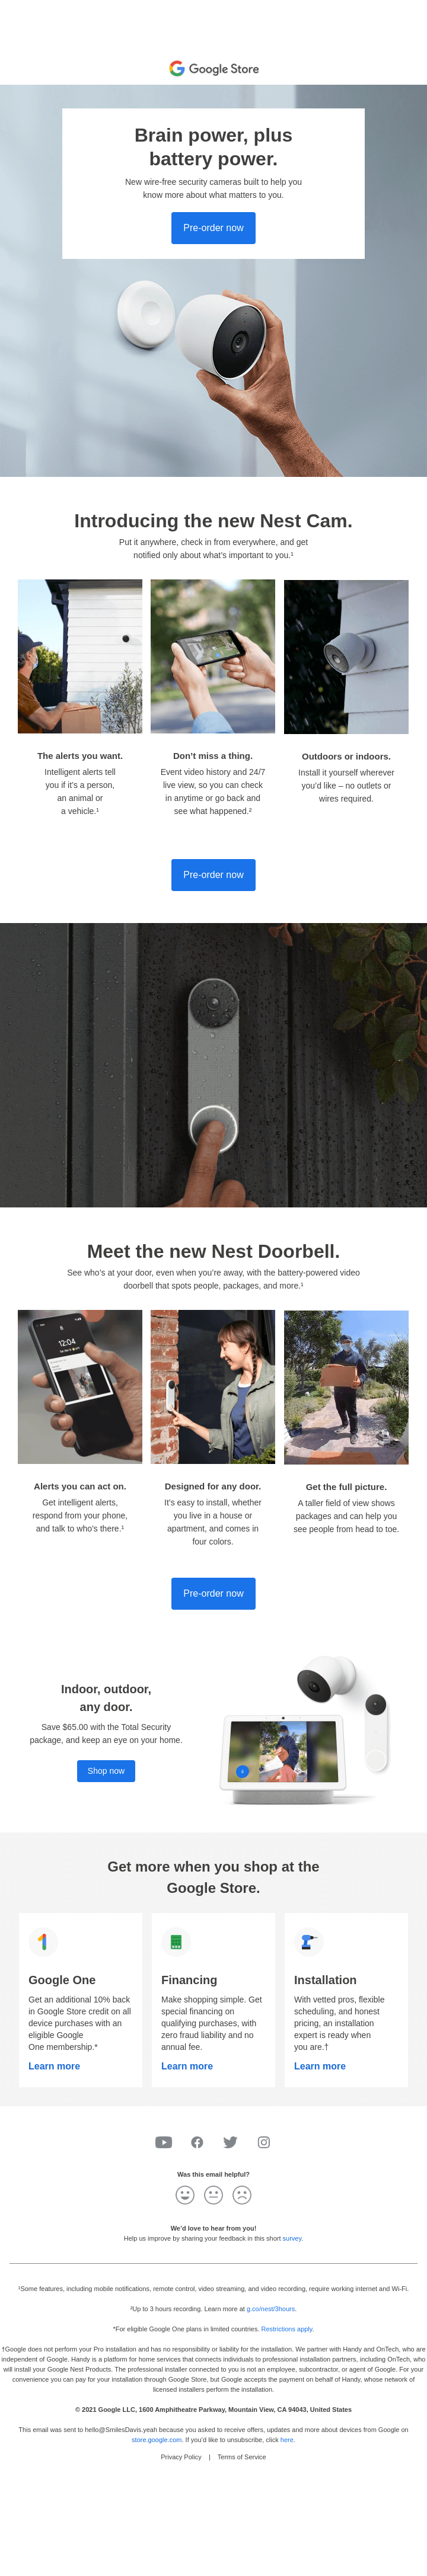 The new Nest Cam and Nest Doorbell